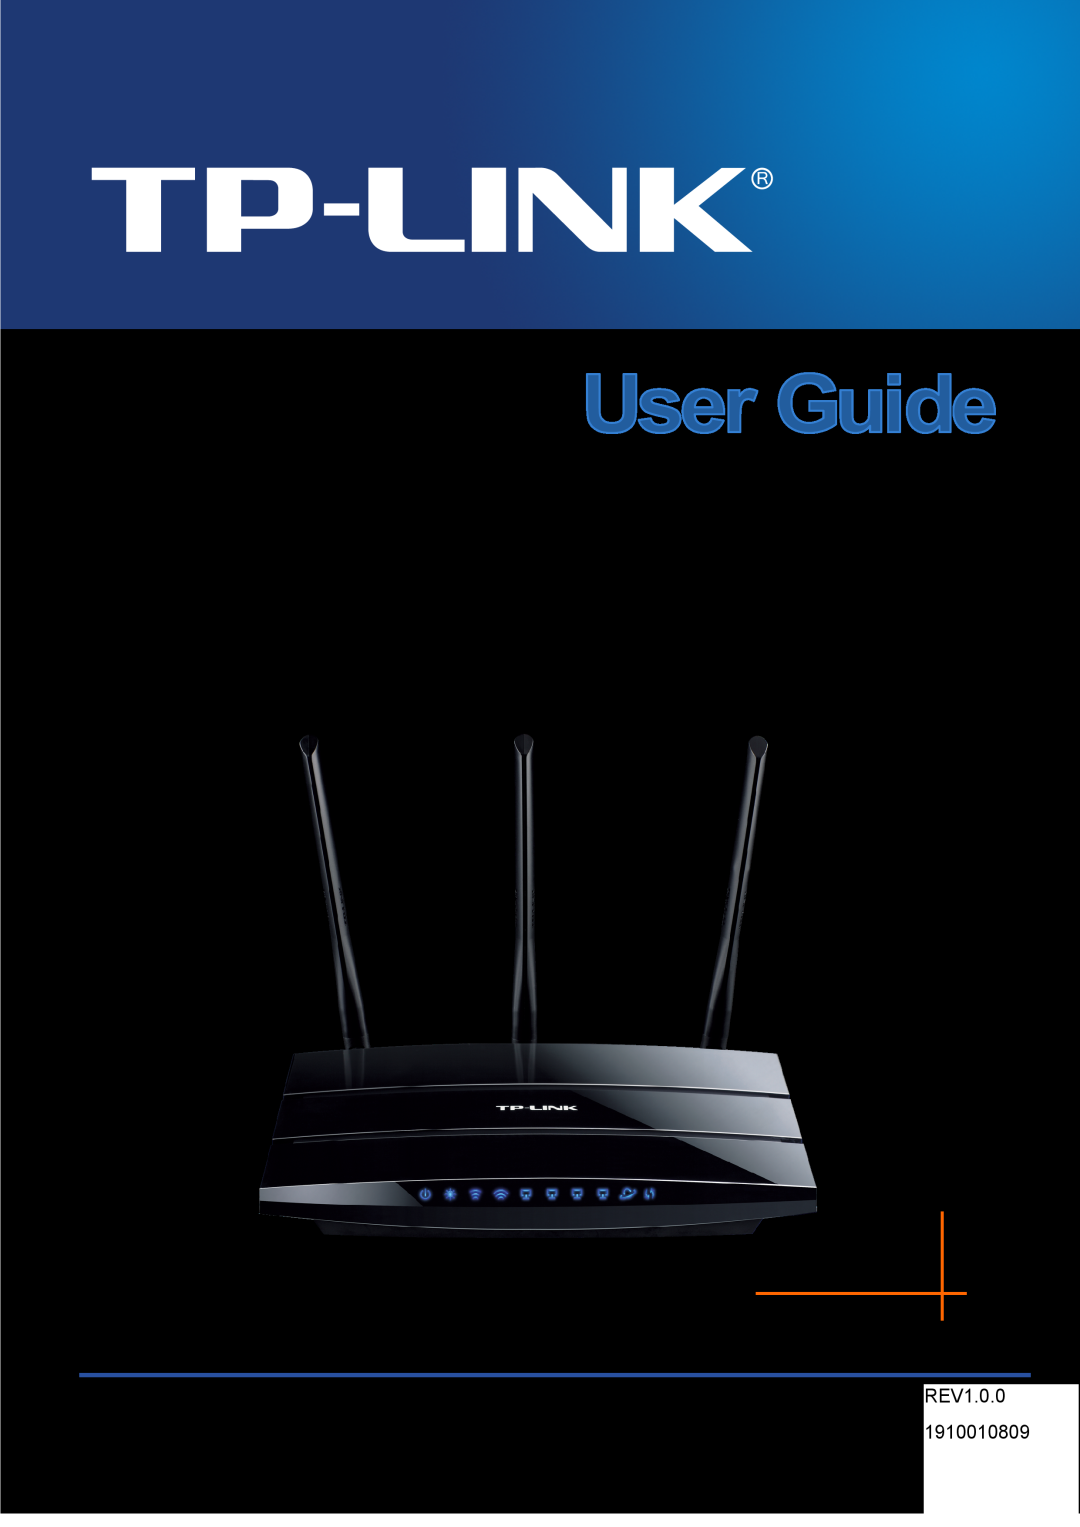 TP-Link manual AC1750 Wireless Dual Band Gigabit Router, Archer C7 